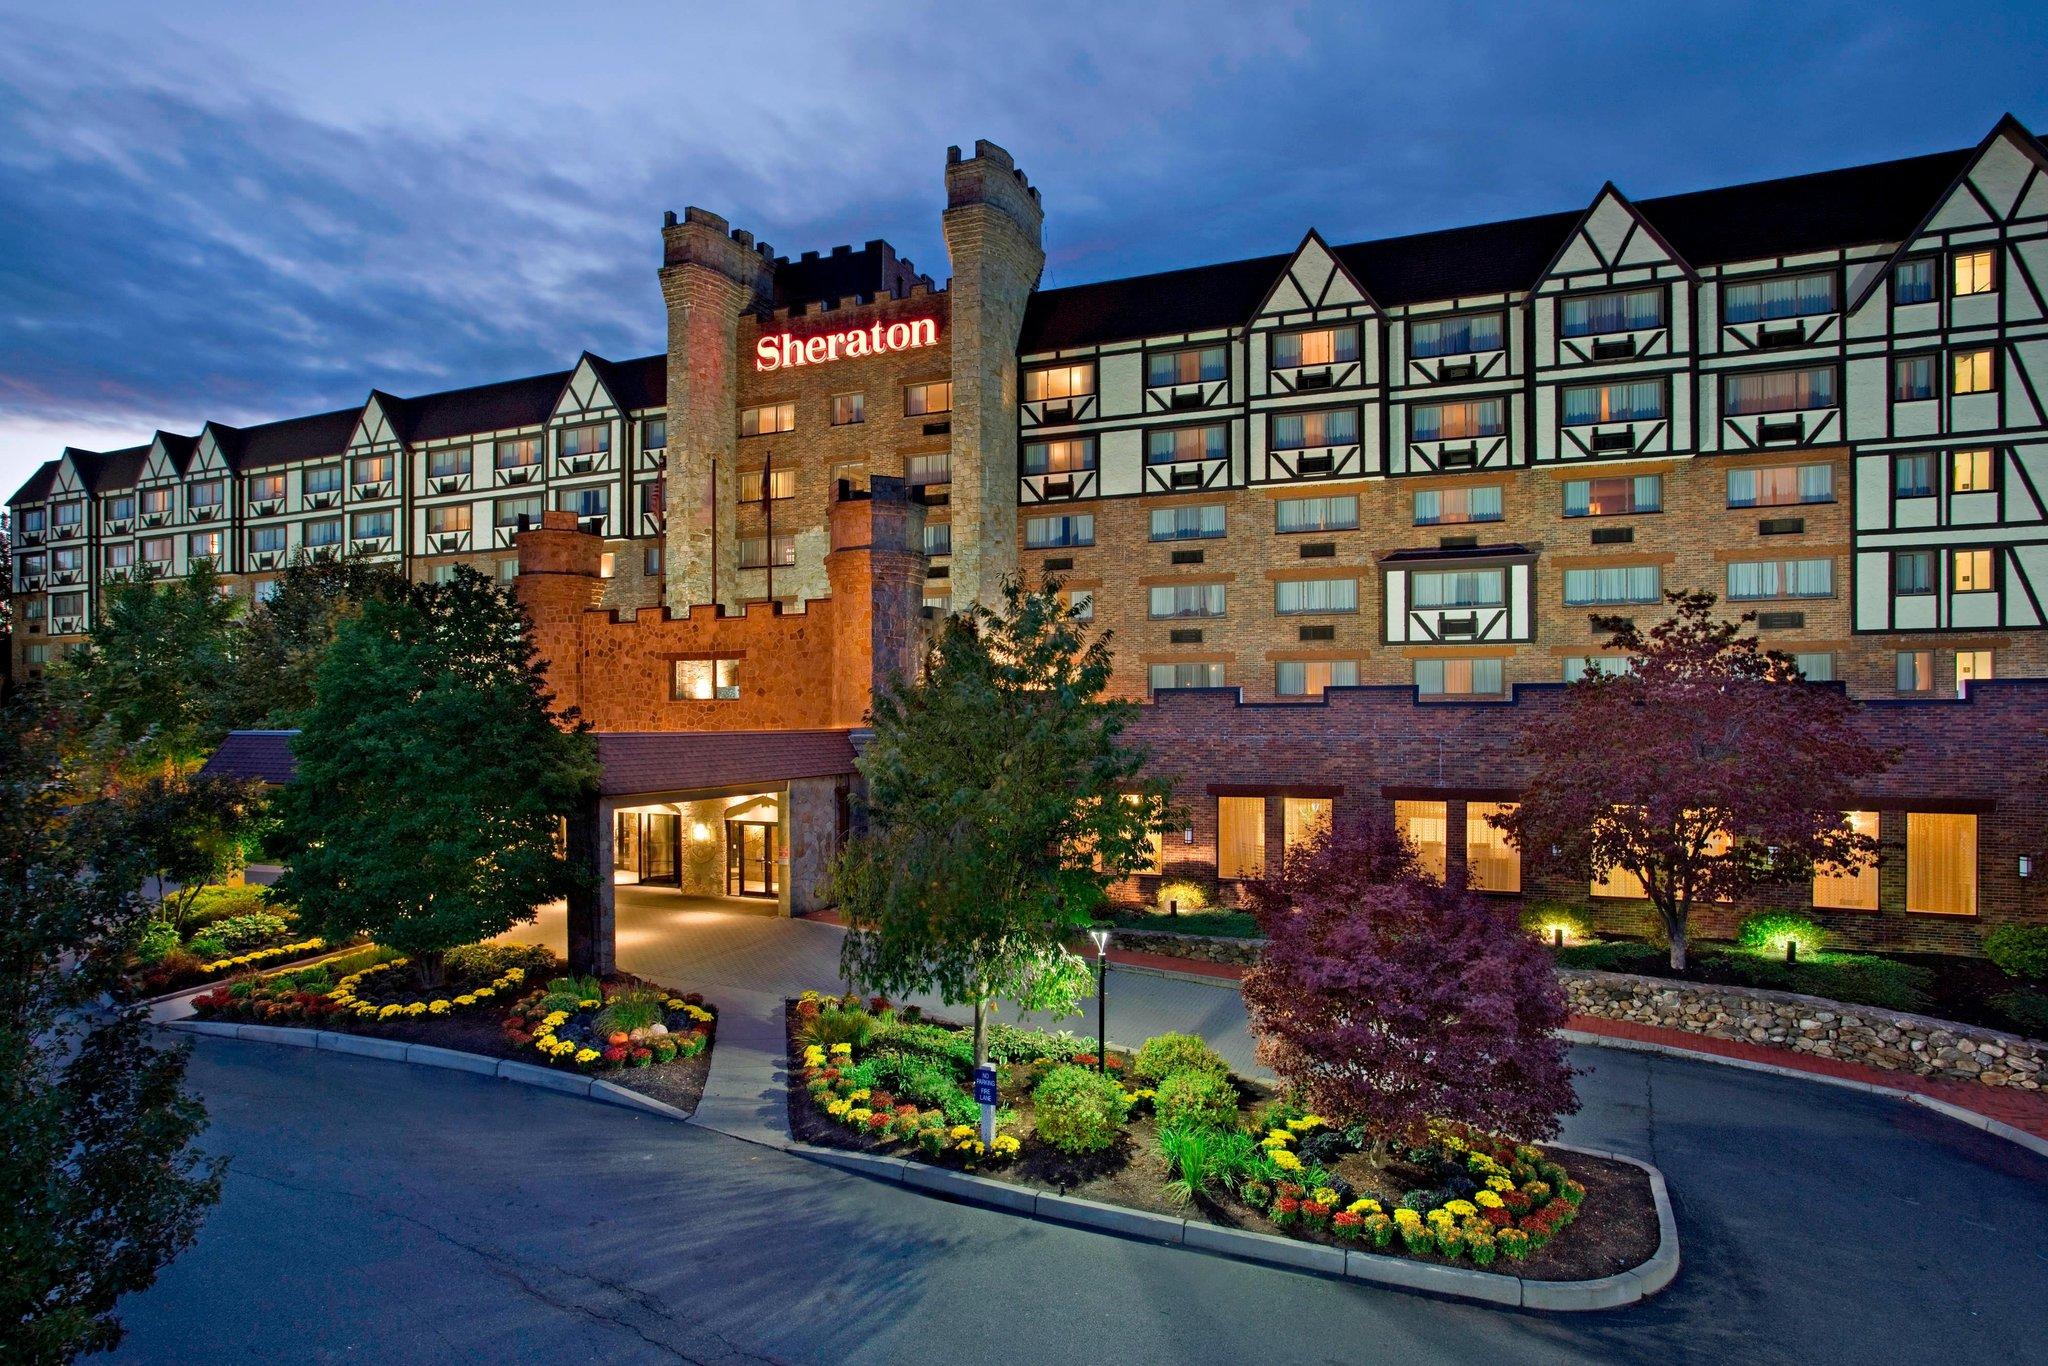 Sheraton Framingham Hotel & Conference Center in Framingham, MA